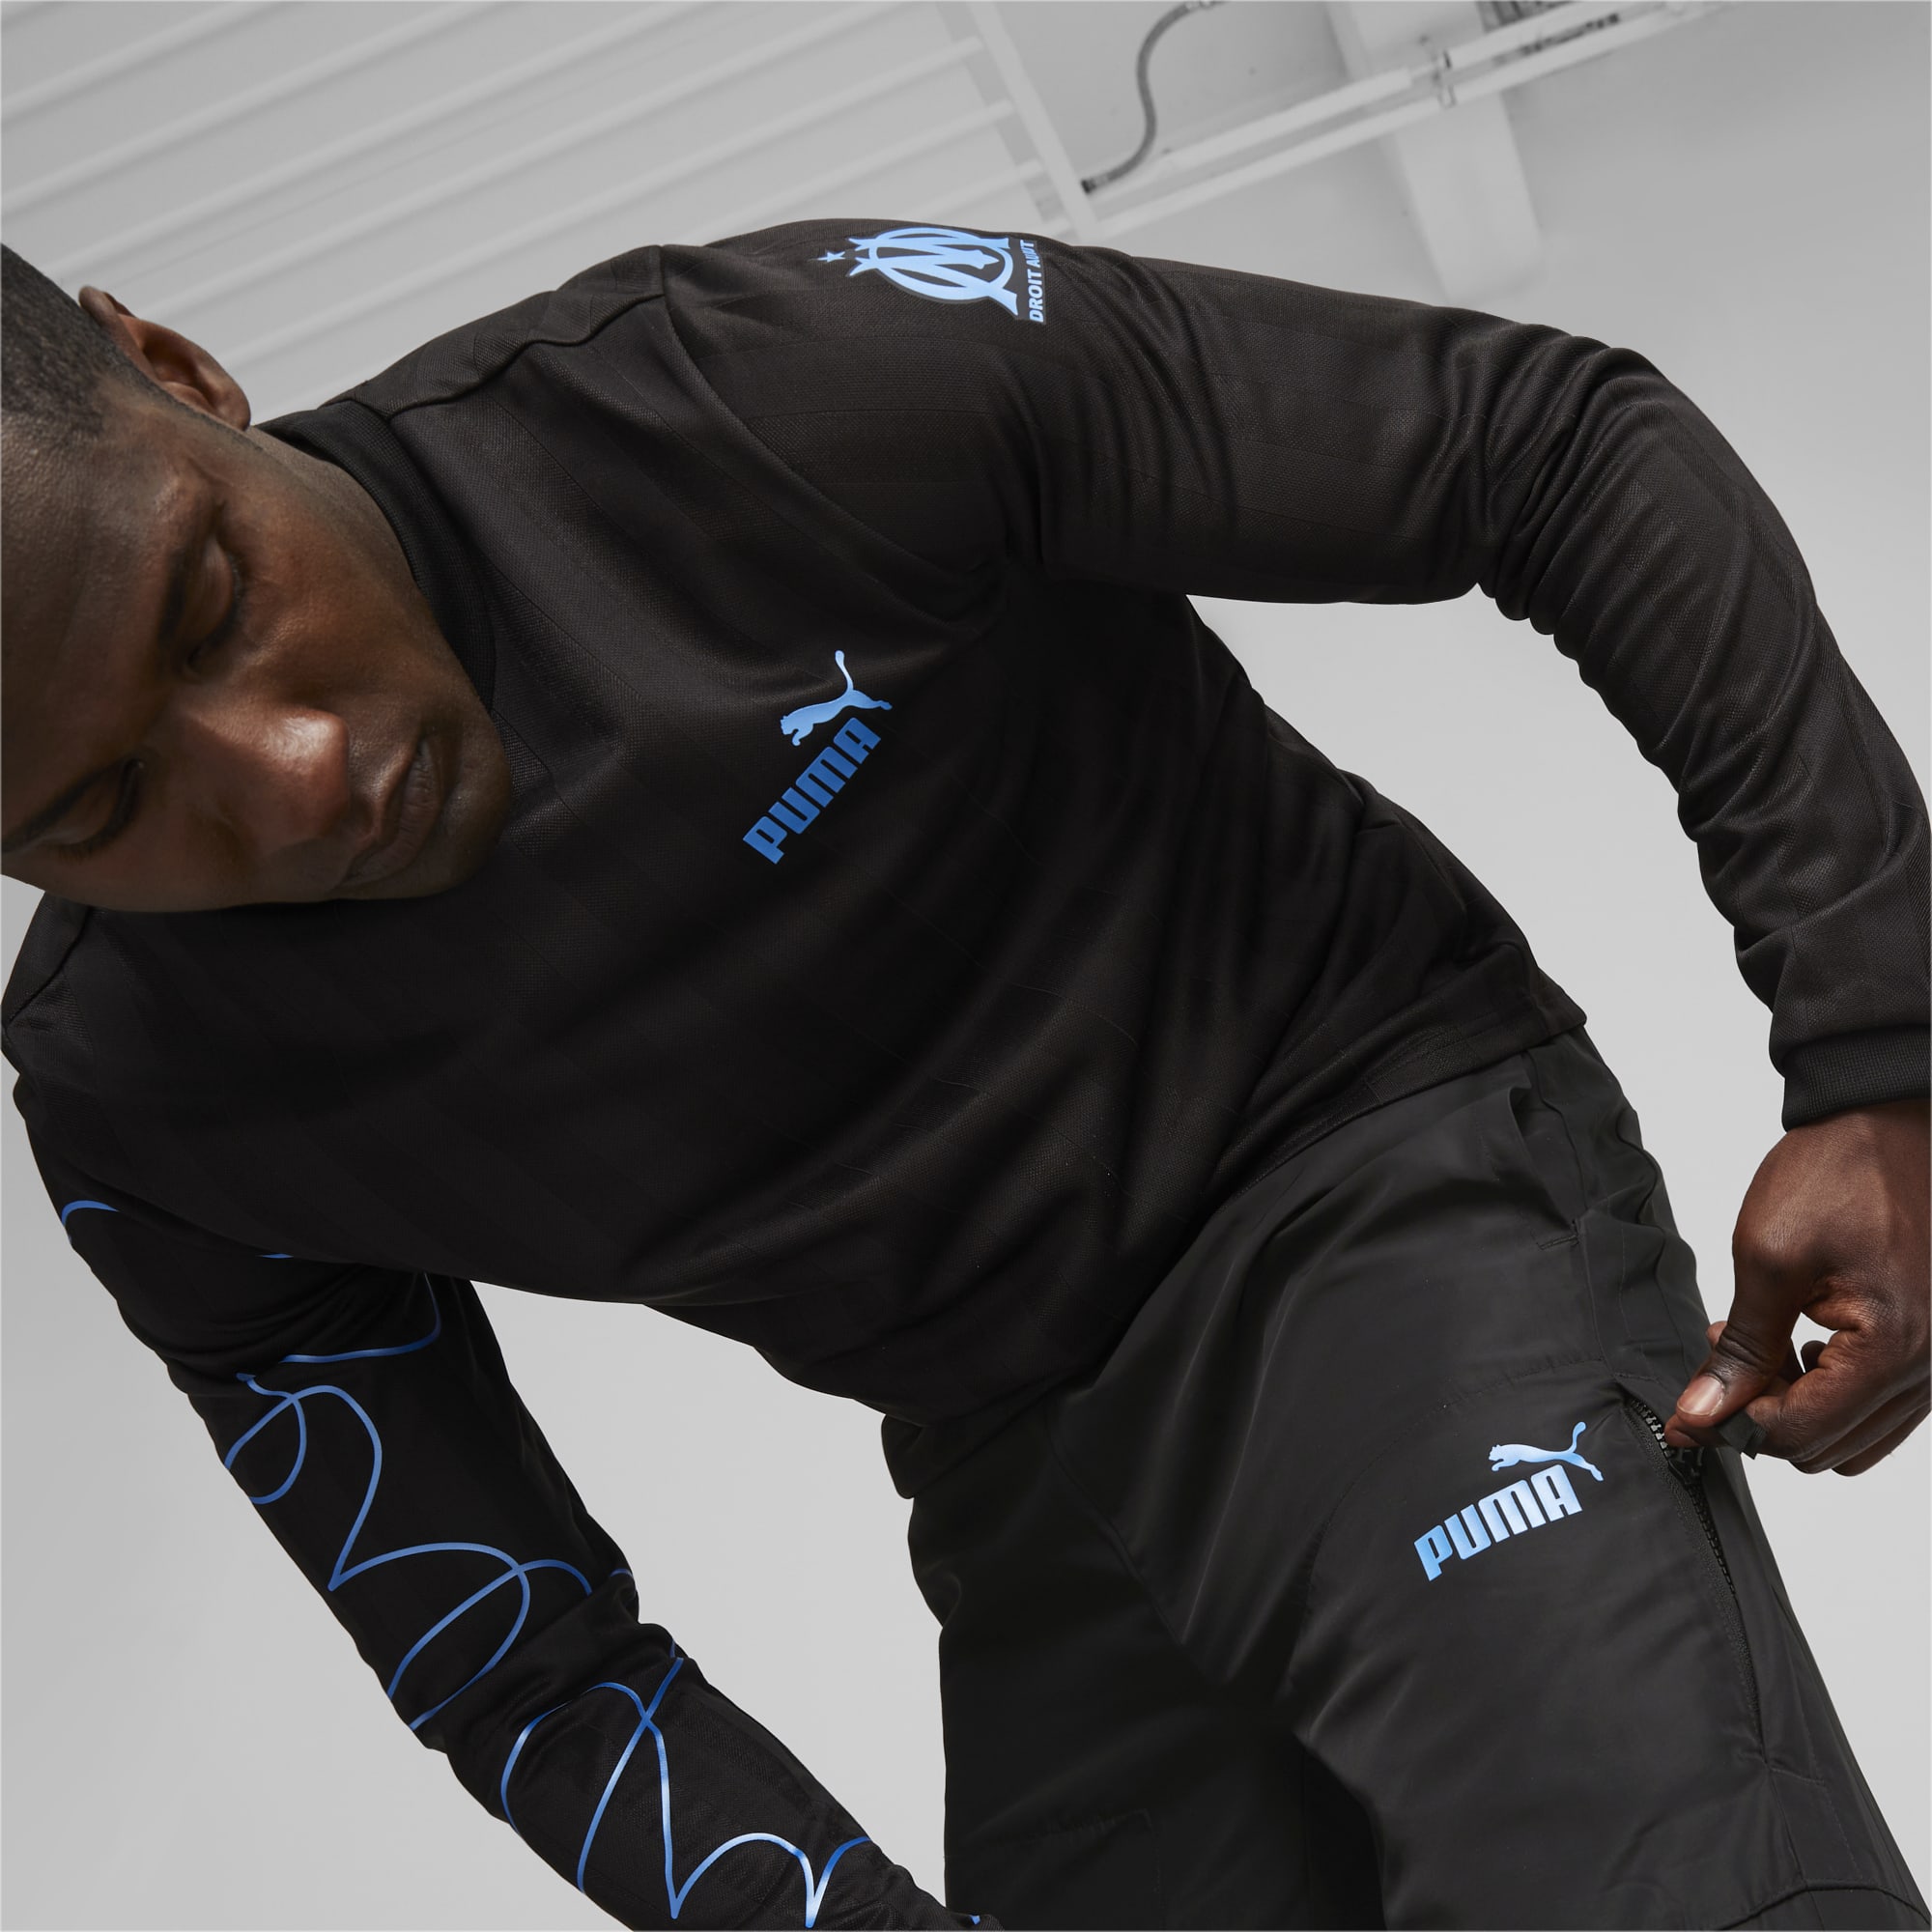 PUMA Olympique De Marseille Ftblstatement Track Pants, Black/Light Aqua